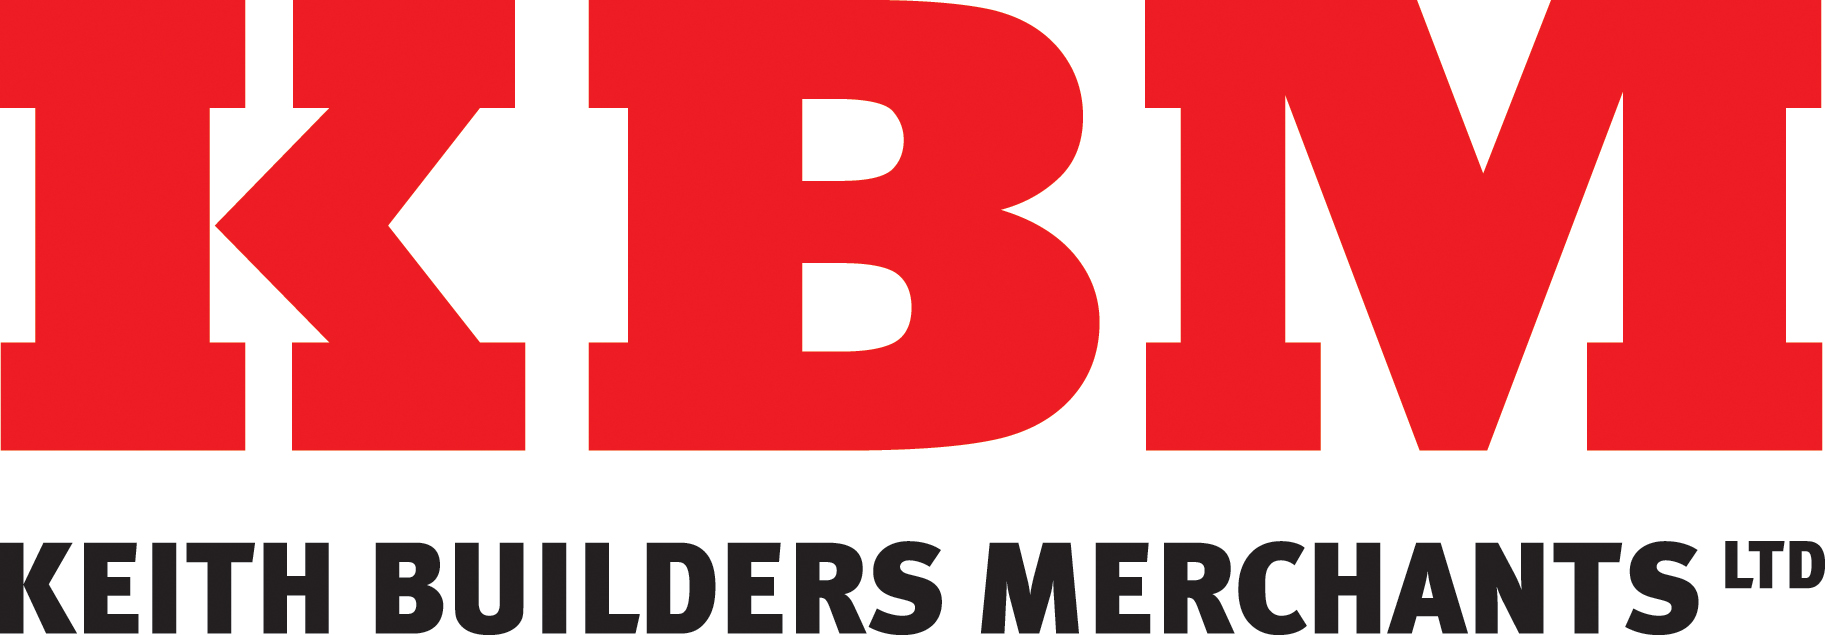 logo for Keith Builders Merchants Ltd